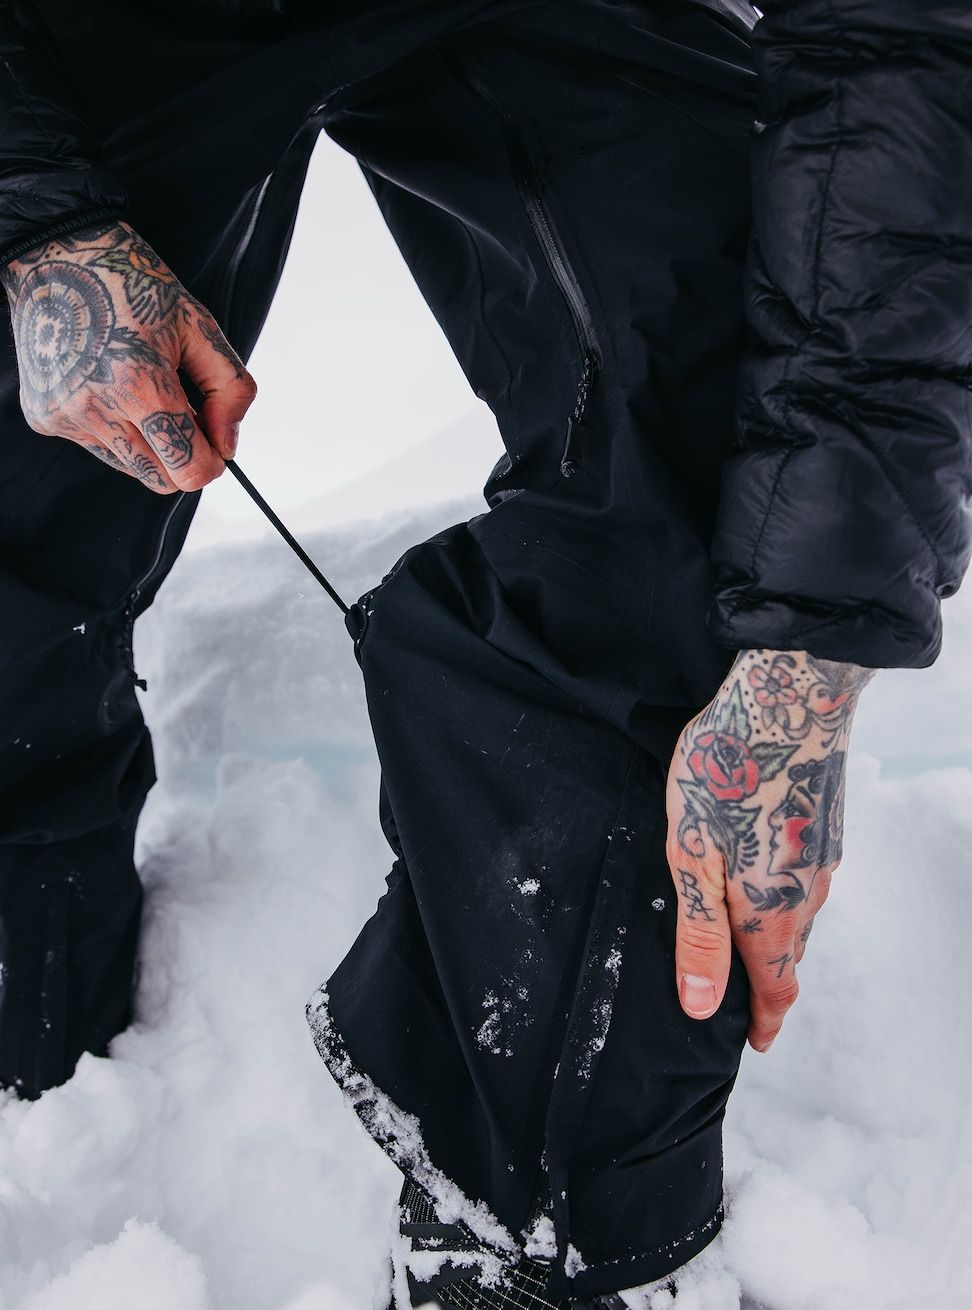 Men's Burton [ak] Hover GORE-TEX PRO 3L Pants True Black Snow Pants